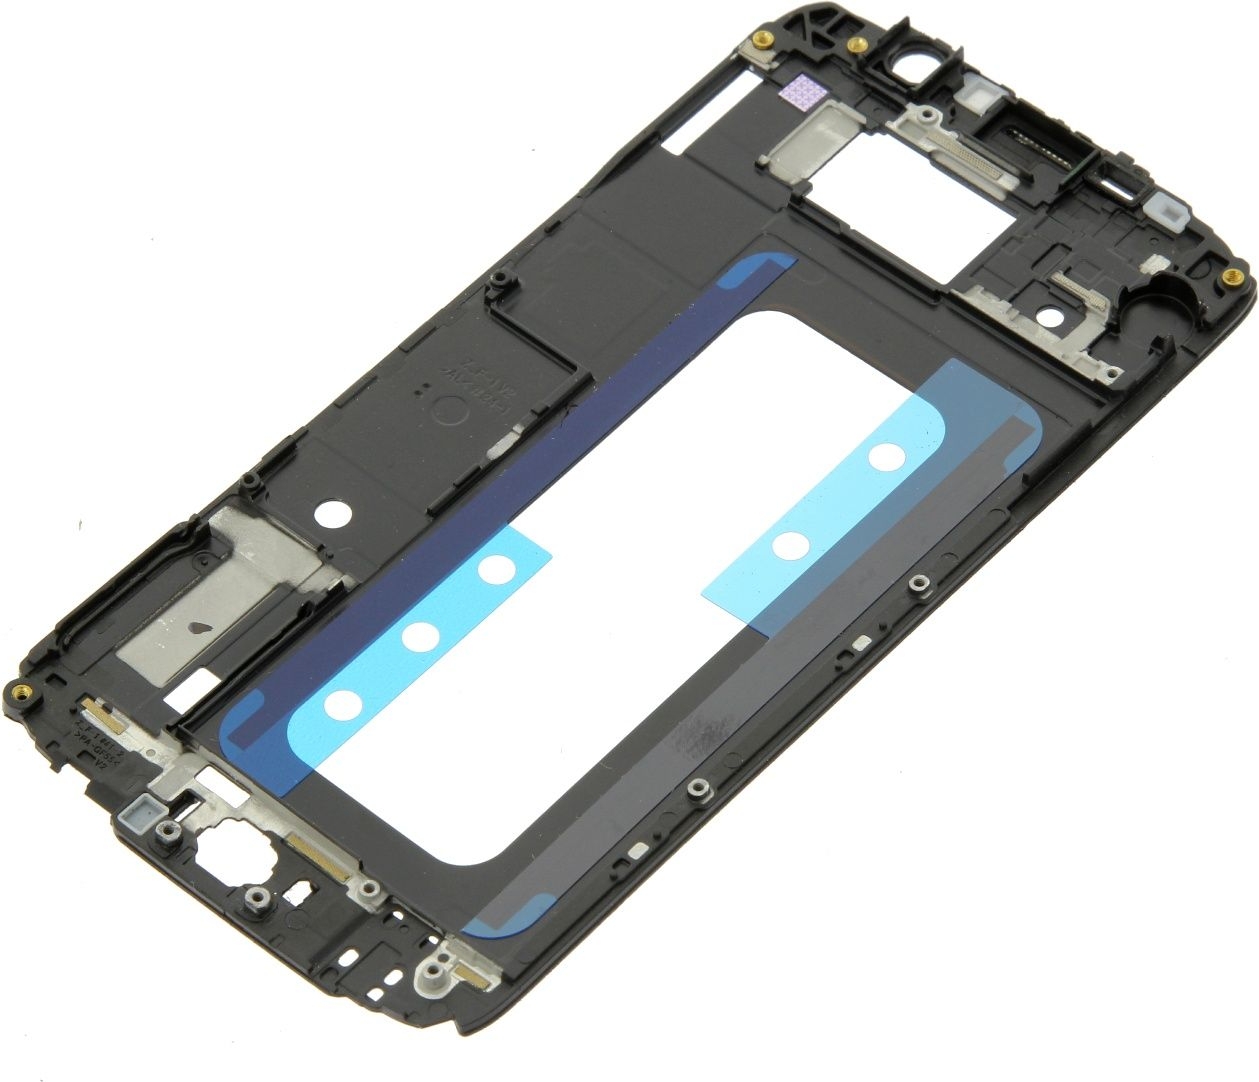 ᐅ • Samsung Galaxy S6 Front Frame A+ Kwaliteit Snel en Goedkoop: PhoneGigant.nl